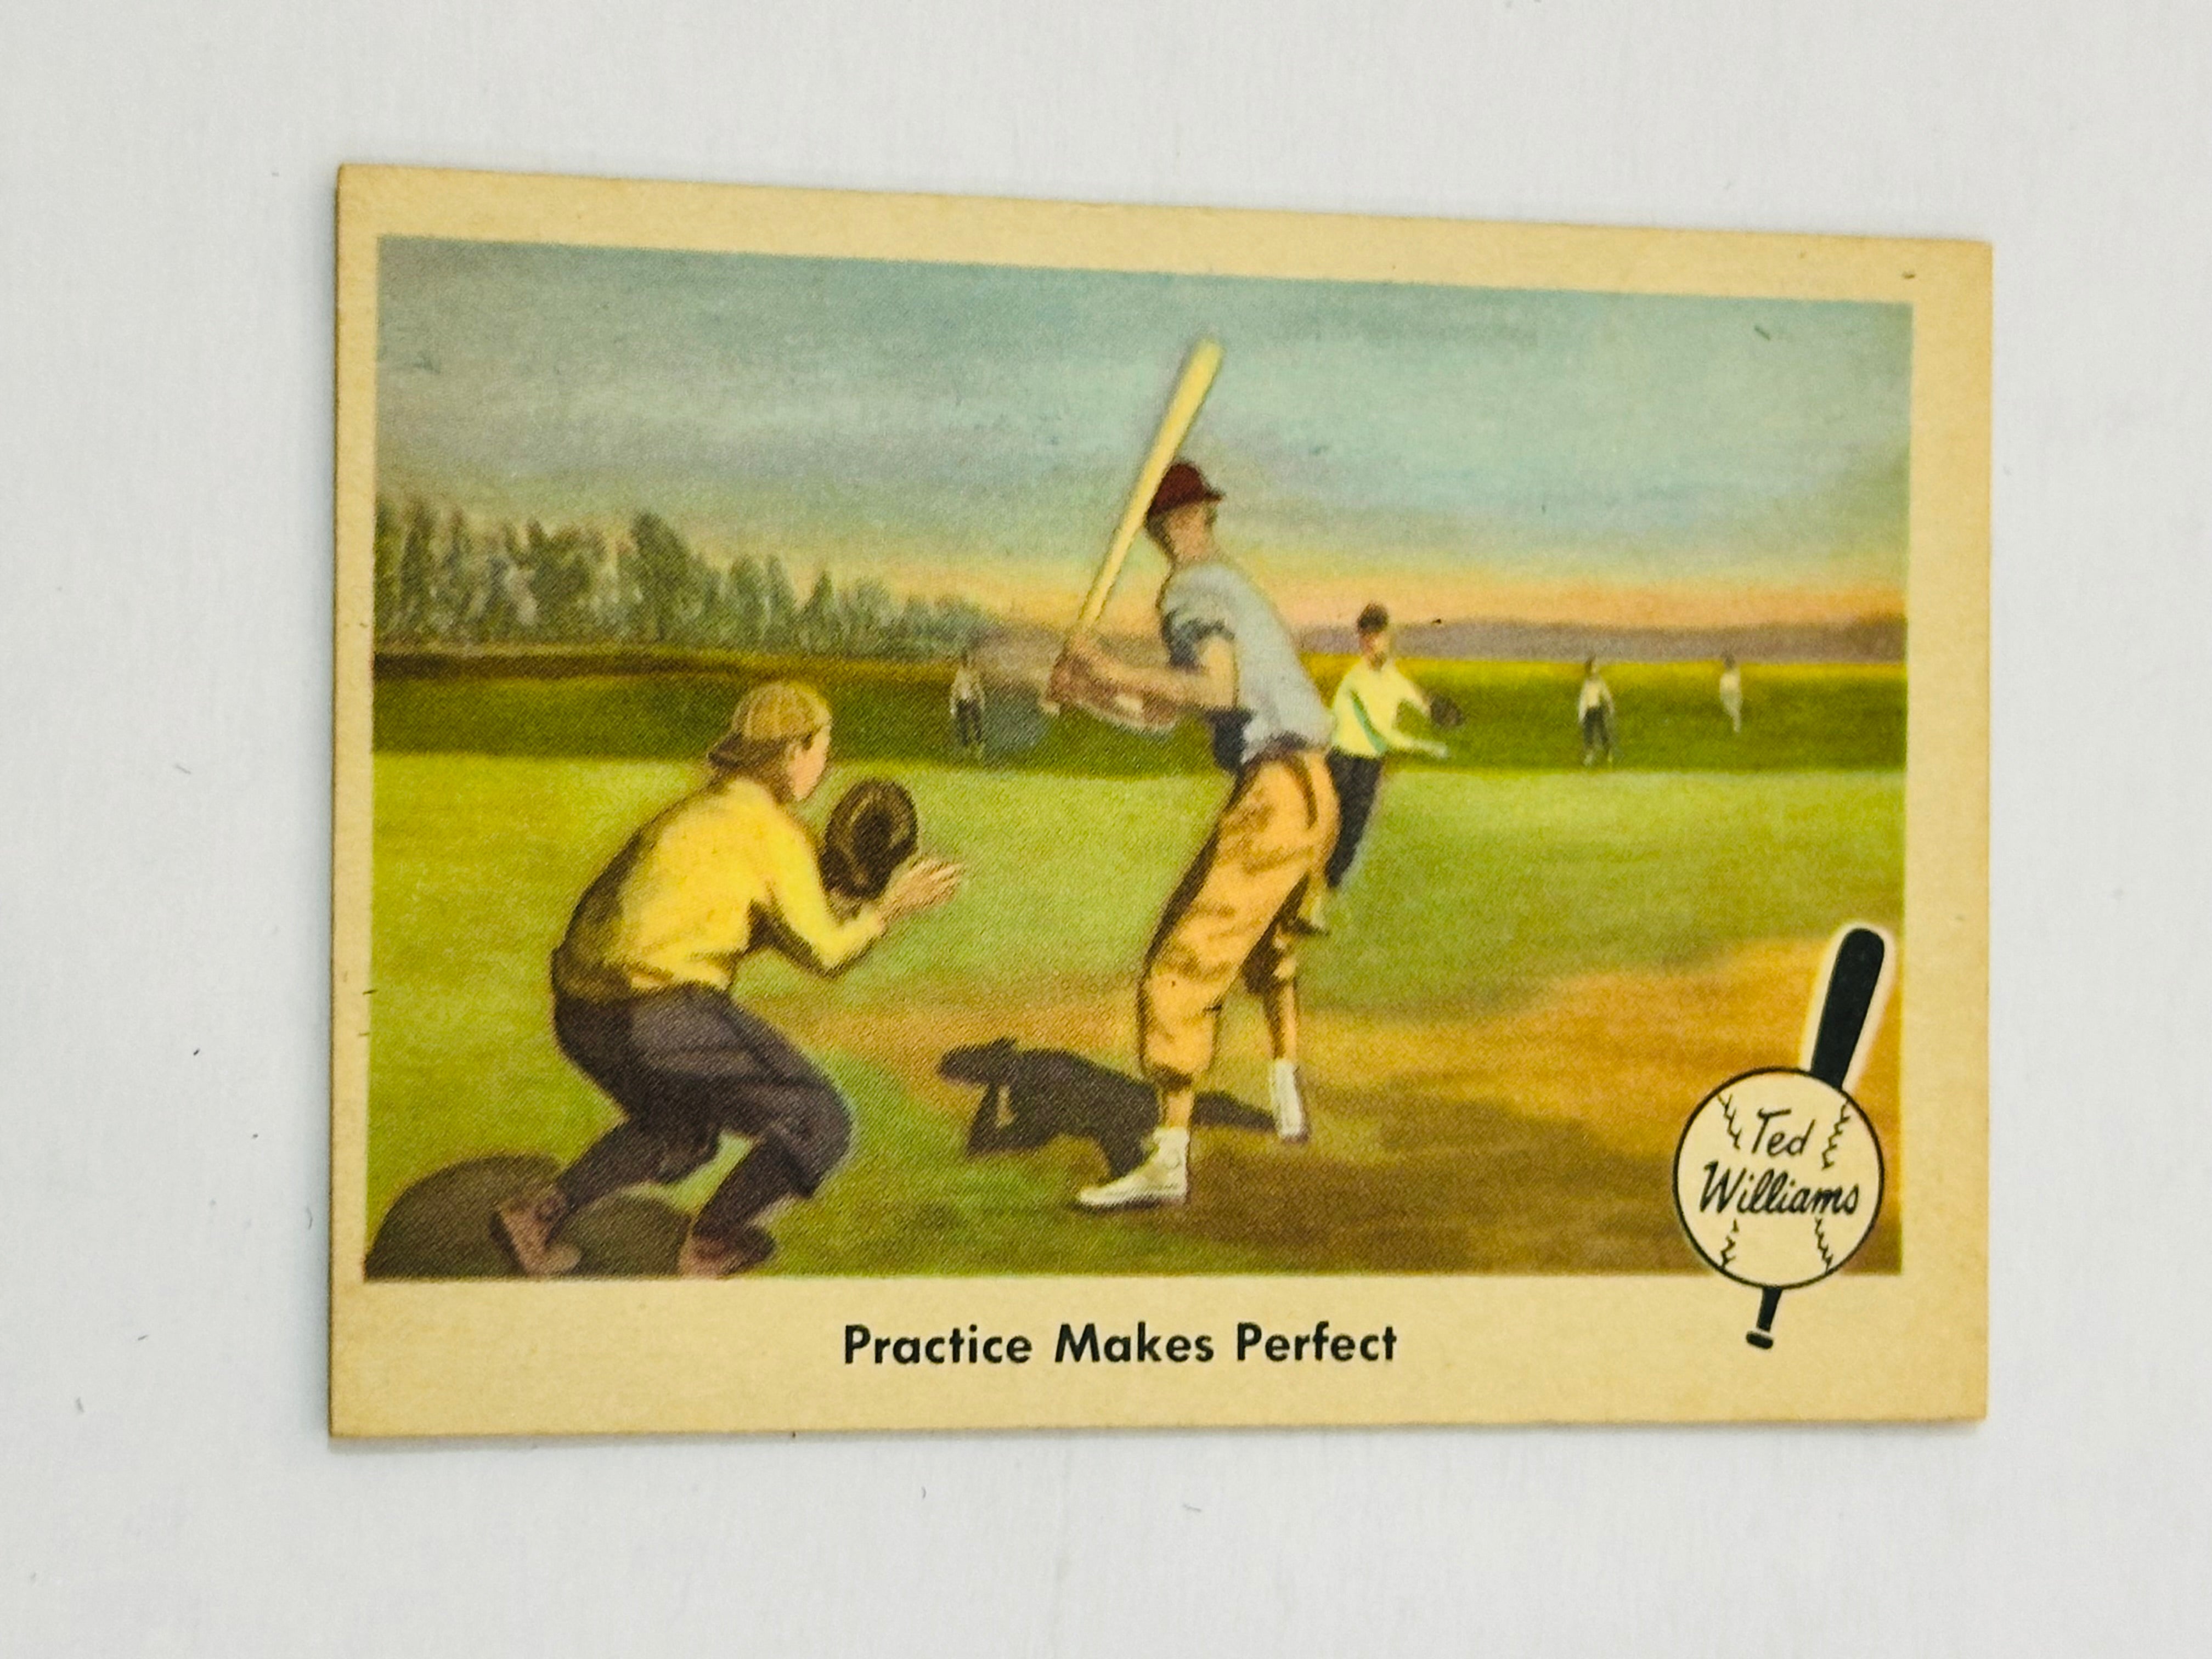 Ted Williams Practice Makes Perfect rare Fleer baseball card 1959